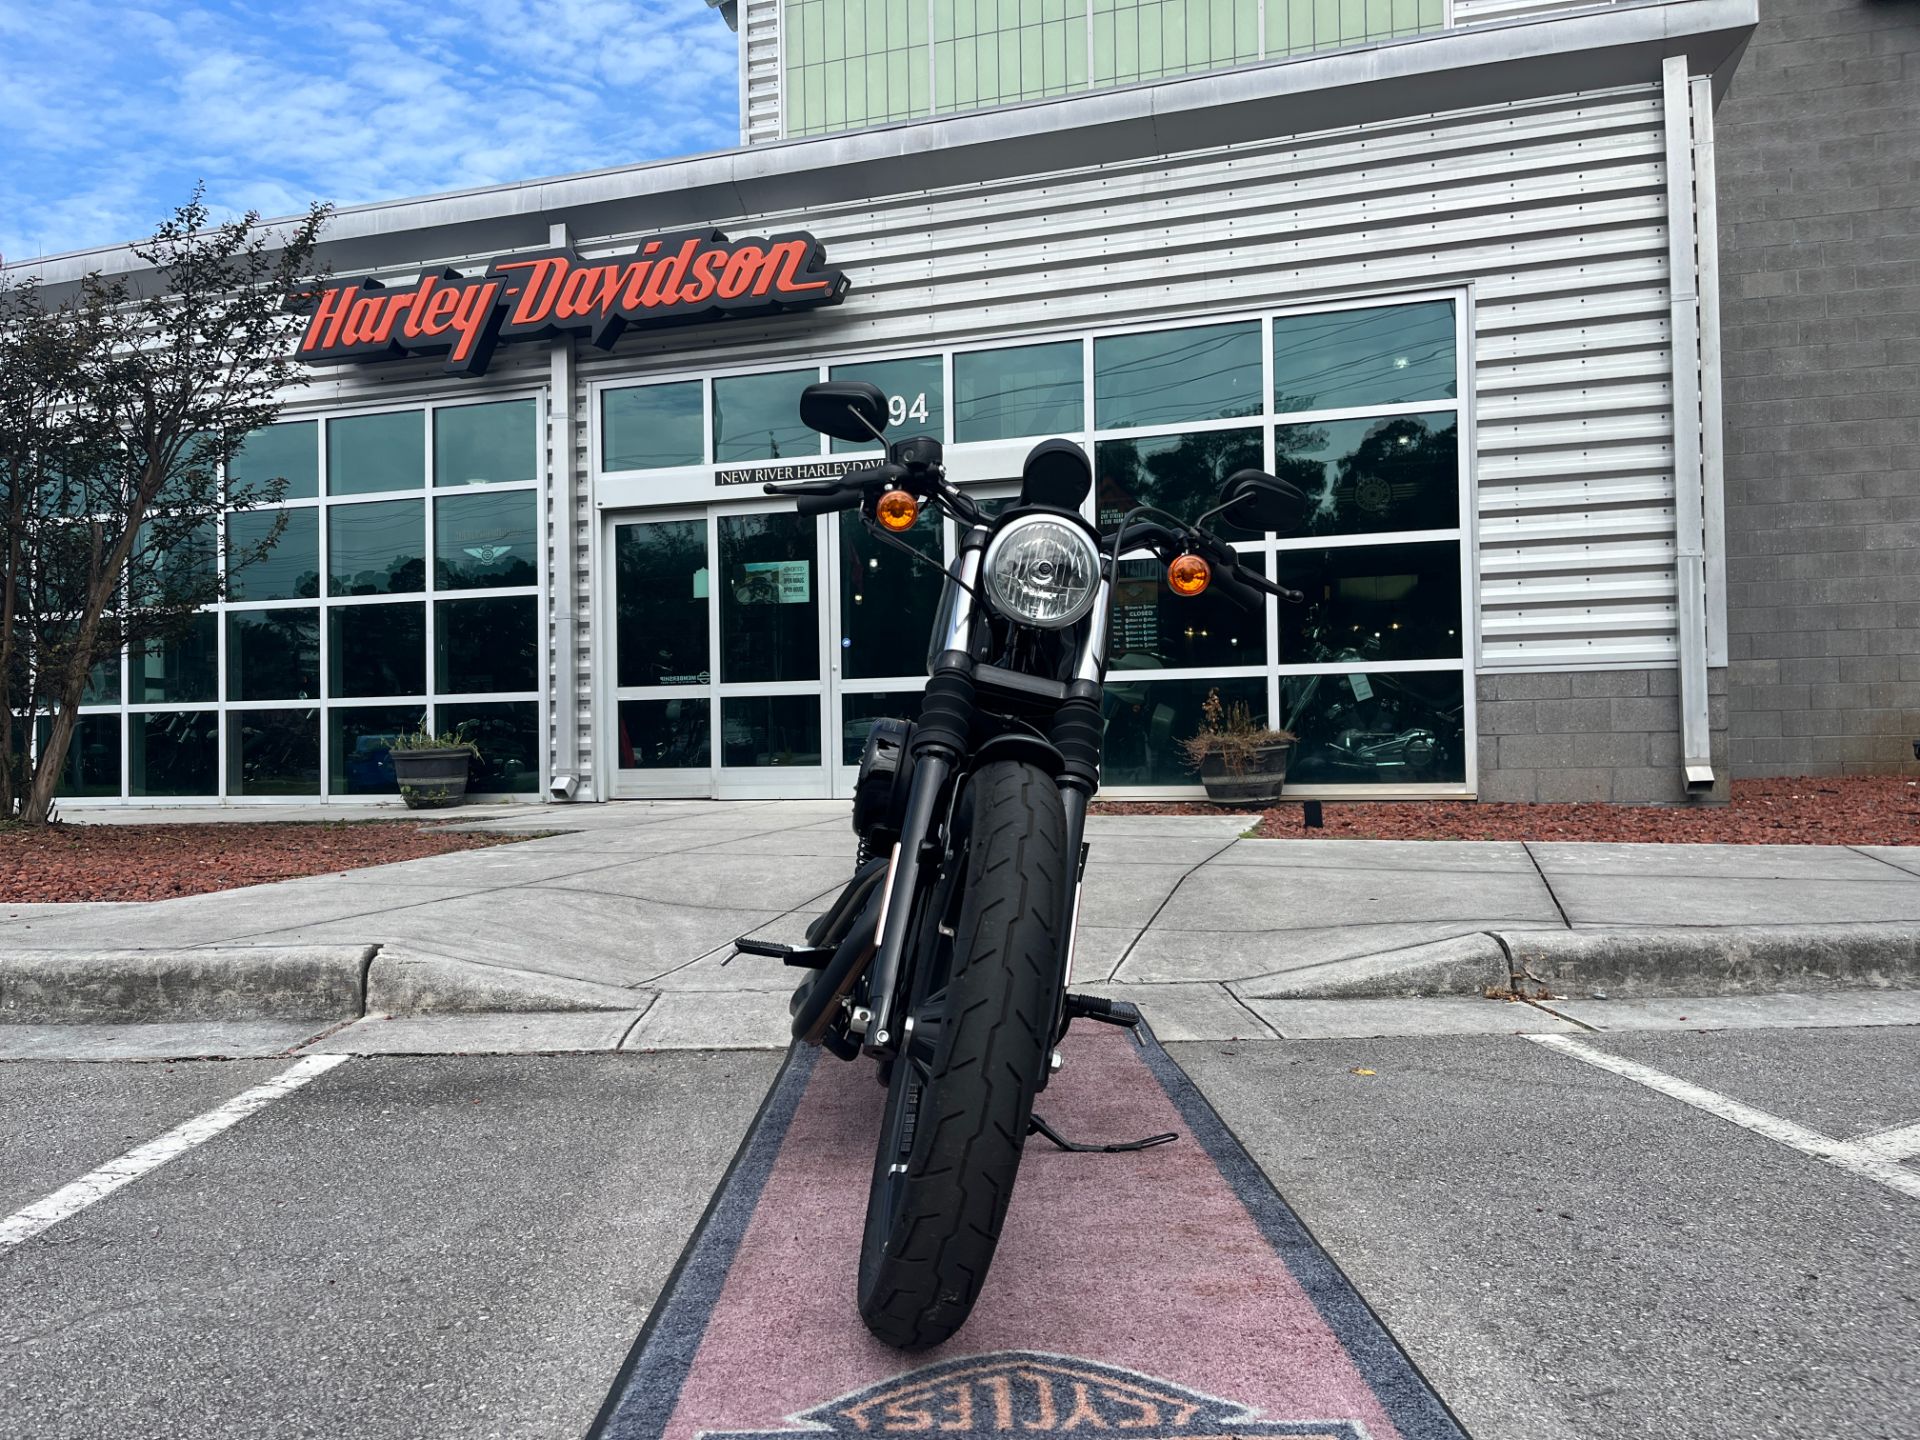 2022 Harley-Davidson Iron 883™ in Jacksonville, North Carolina - Photo 7